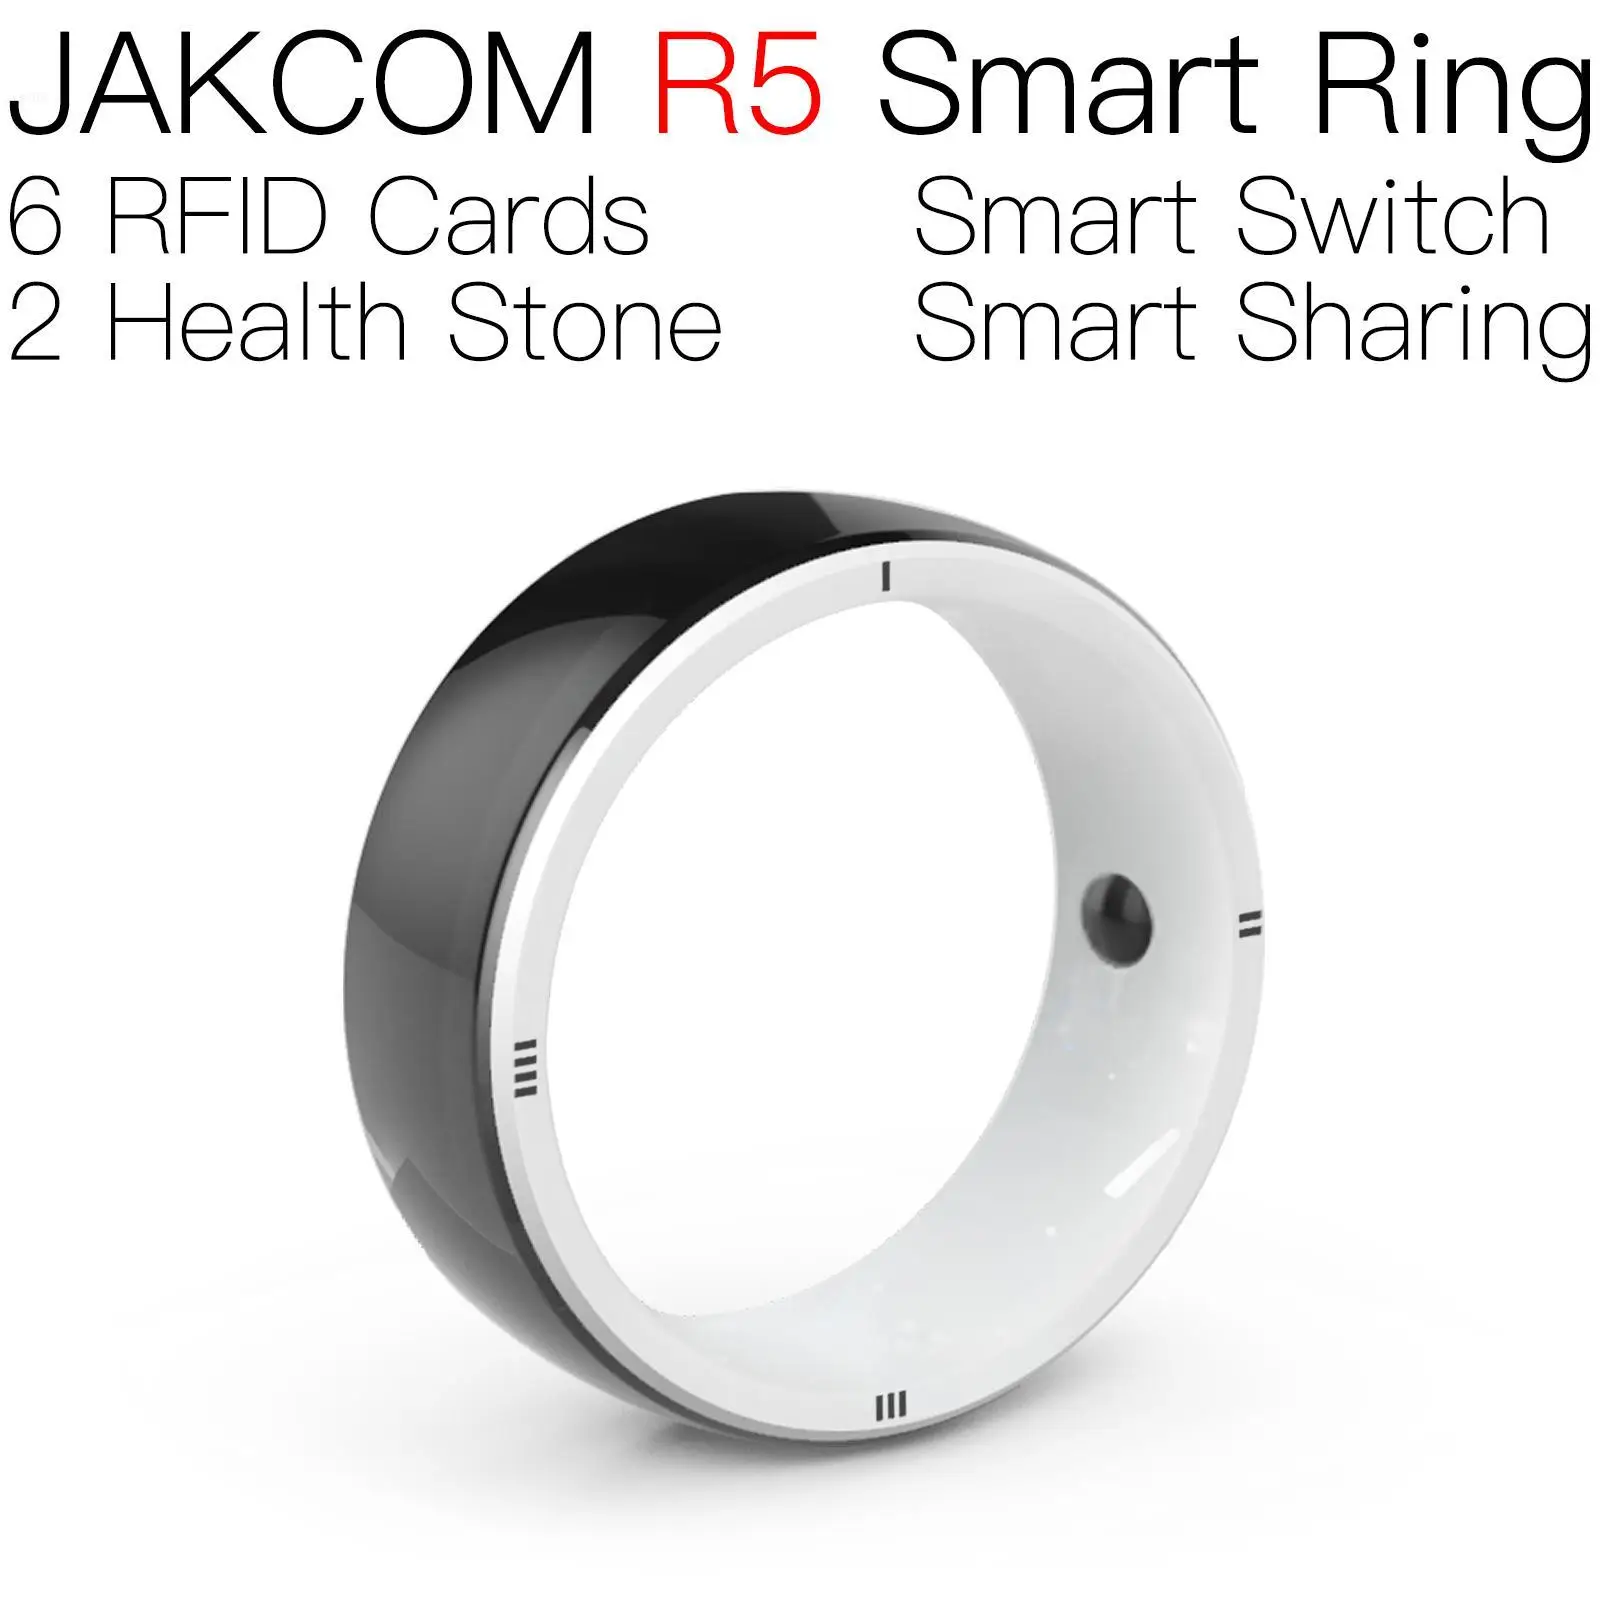 

JAKCOM R5 Smart Ring Newer than clone trooper minifigure tags 125khz regravavel rfid tag hueur frame hacking devices tools